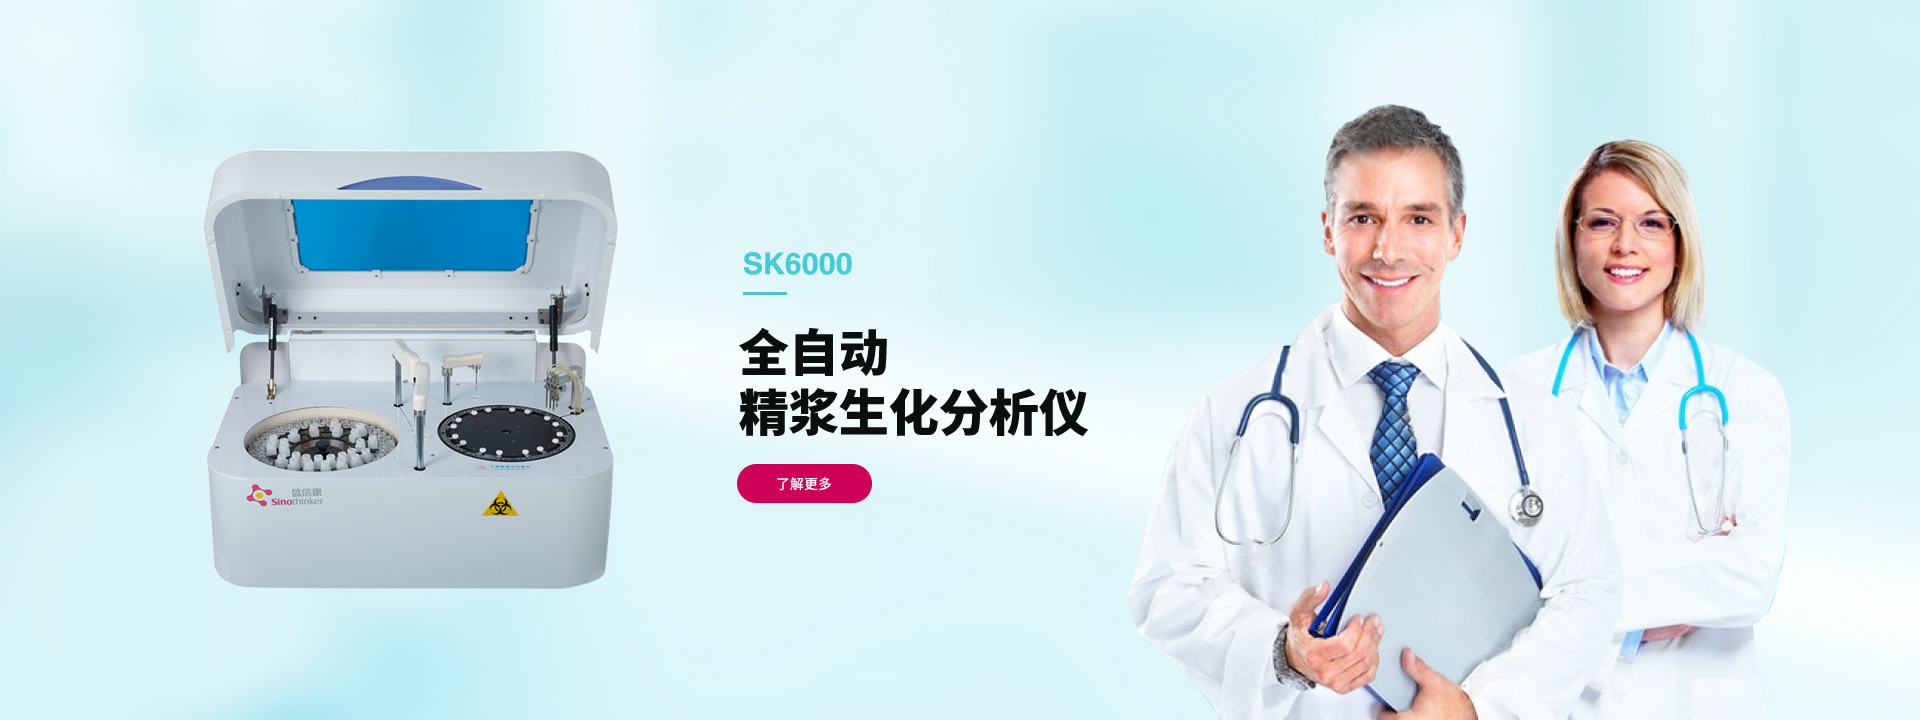 SK6000生殖医学全自动生化分析仪